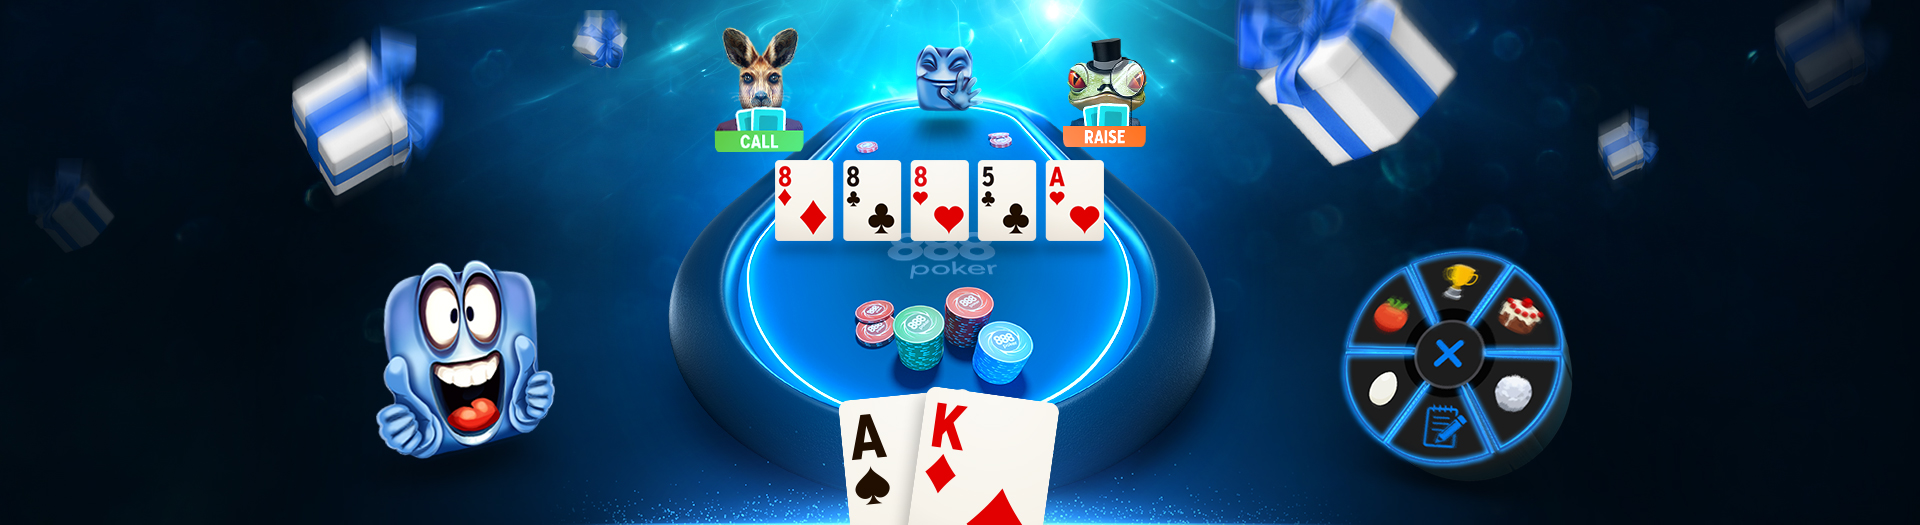 TS-43644-Poker-8-Launch-LP-image-1600767511450_tcm1531-497727